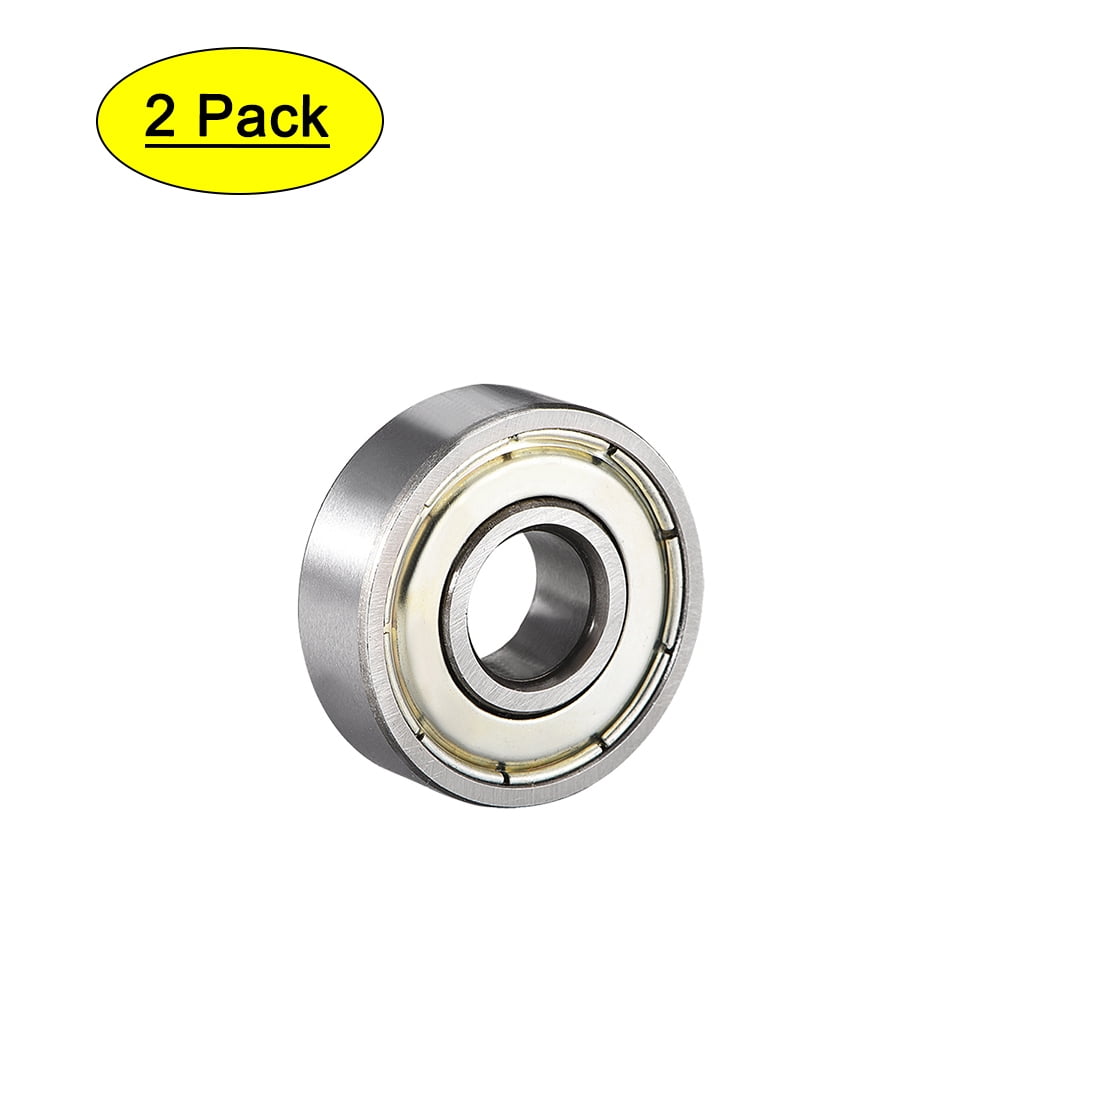 Pack of 2 Pallet Jack Load Wheel 15mm ID x 1-3/8" Ball Bearings